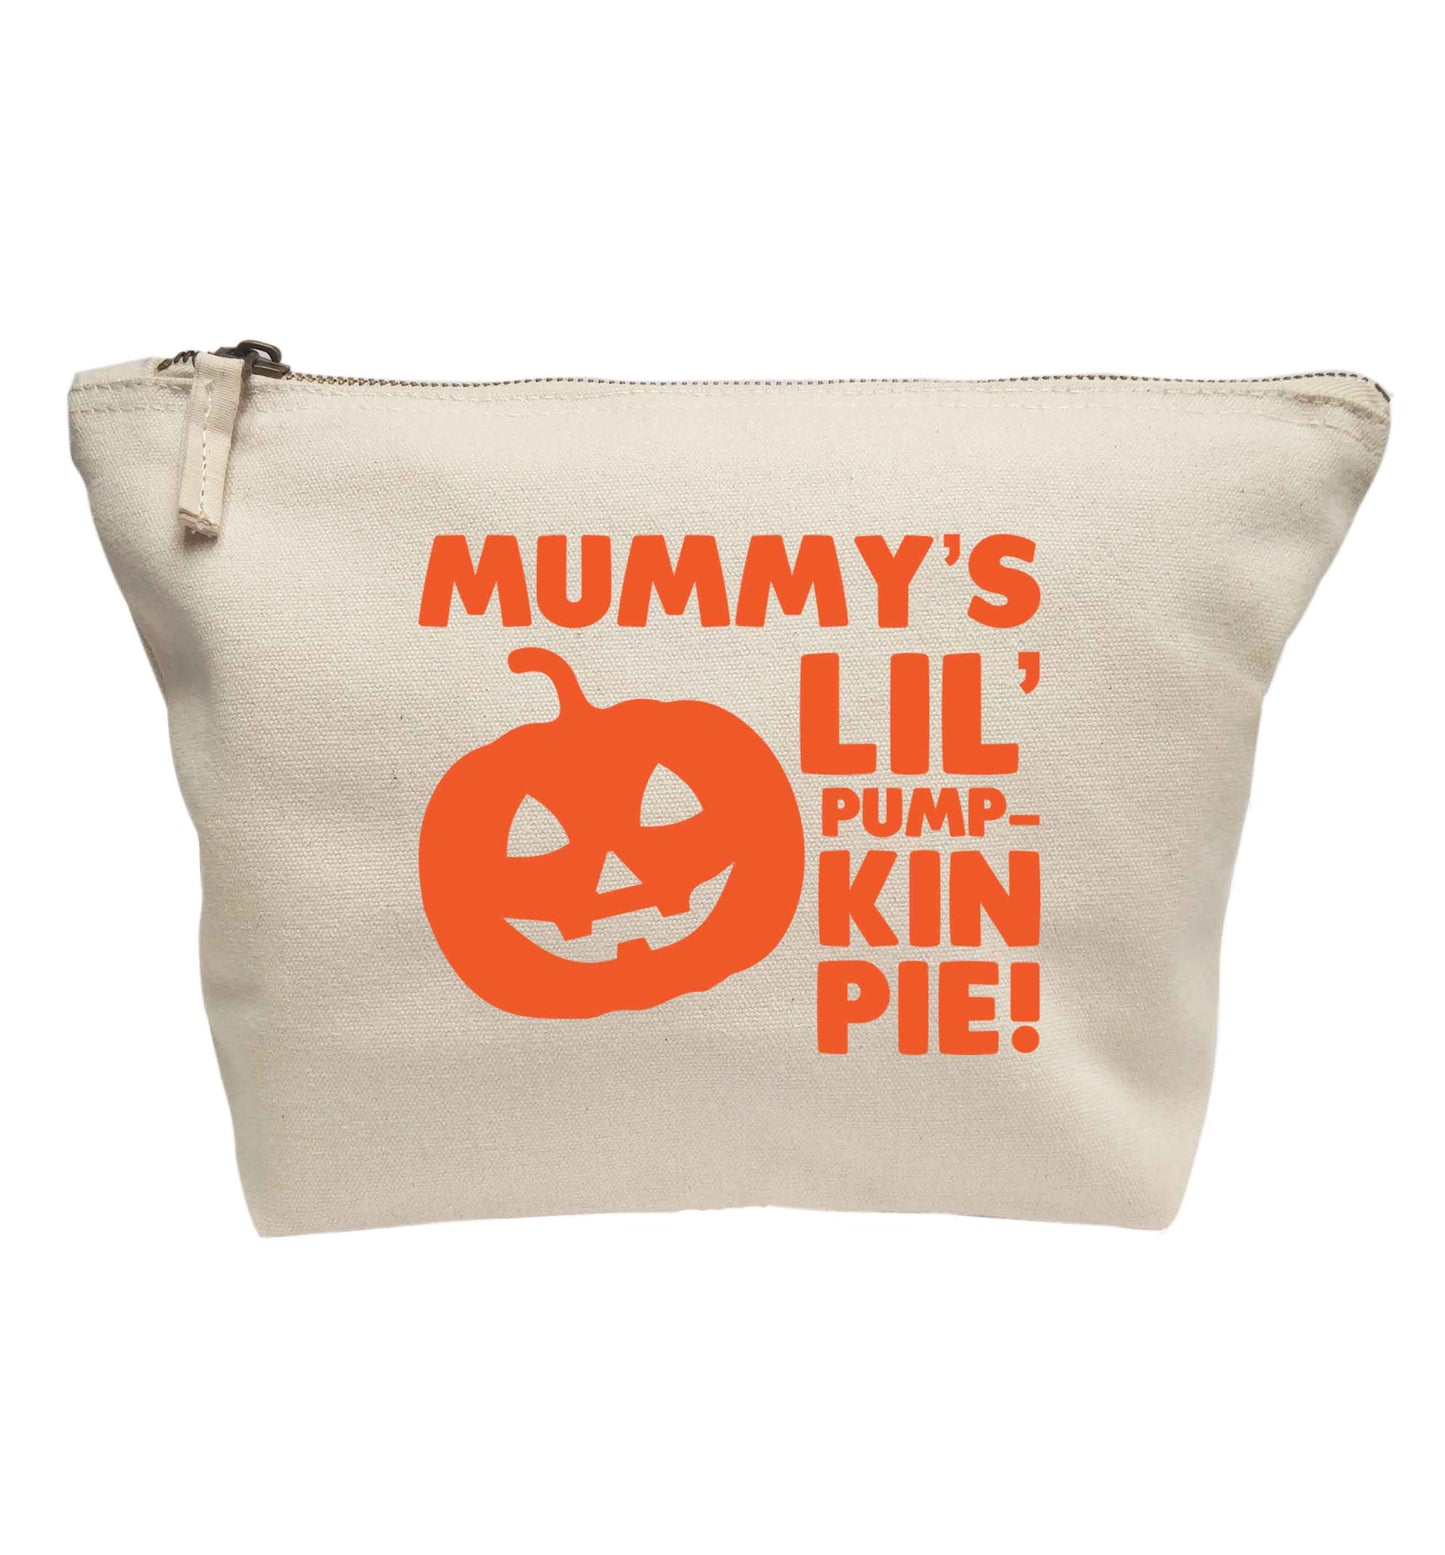 Mummy's lil' pumpkin pie | Makeup / wash bag